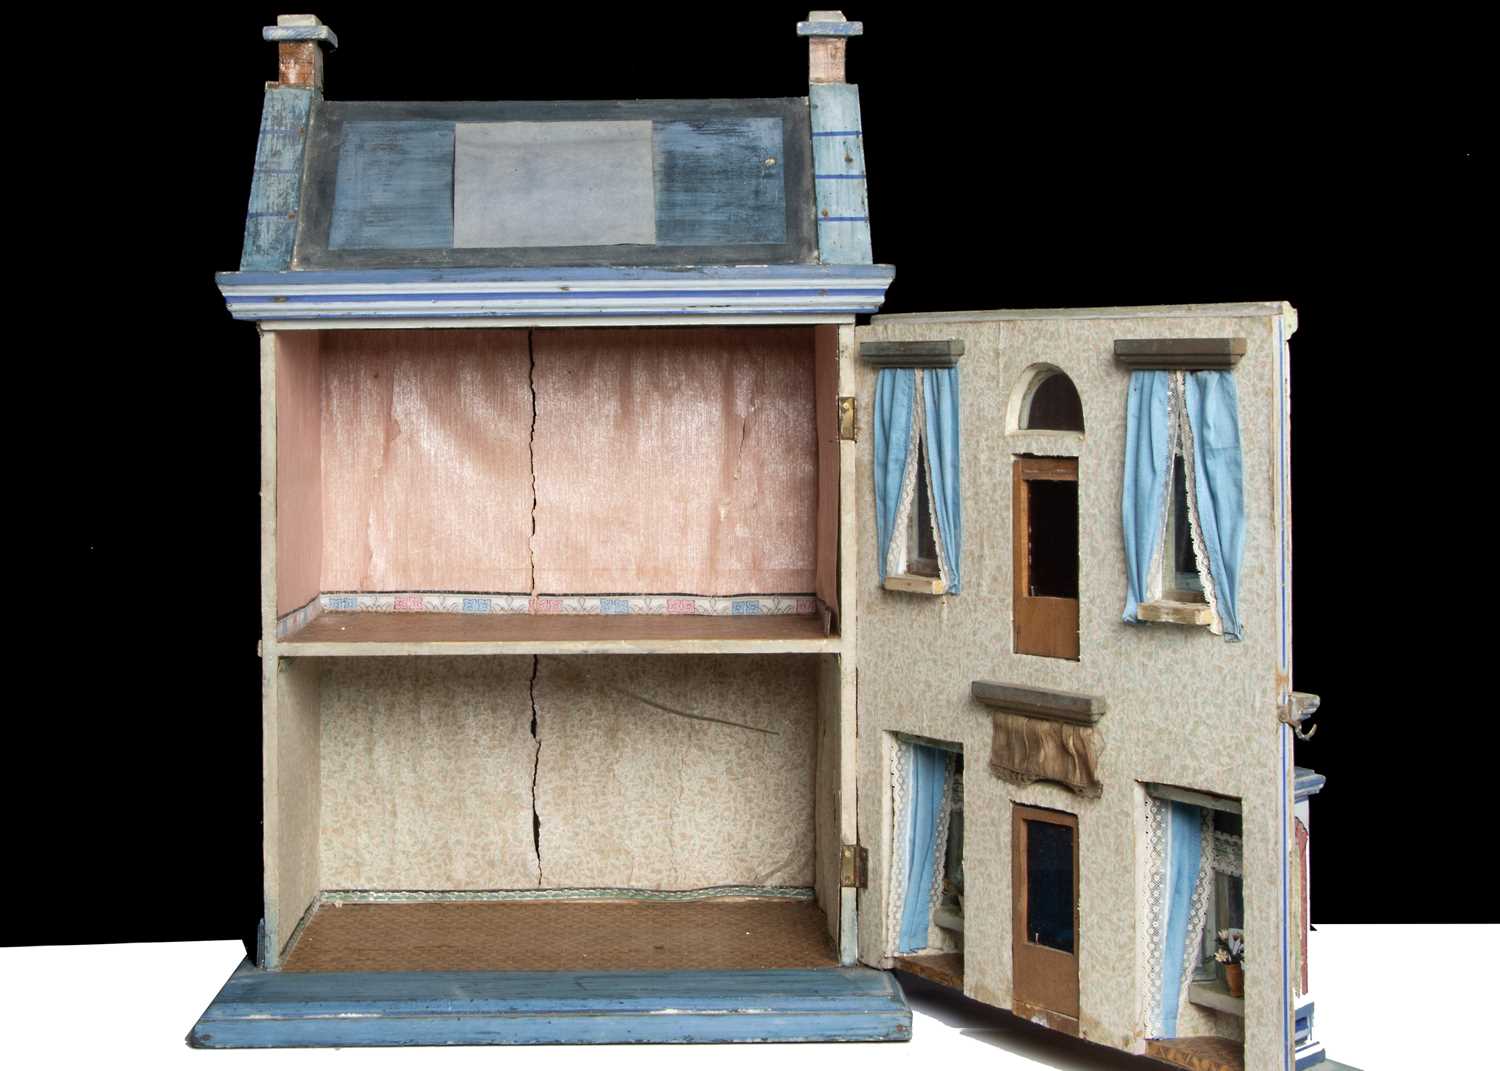 A Gottschalk wooden blue roof dolls’ house, - Image 2 of 2